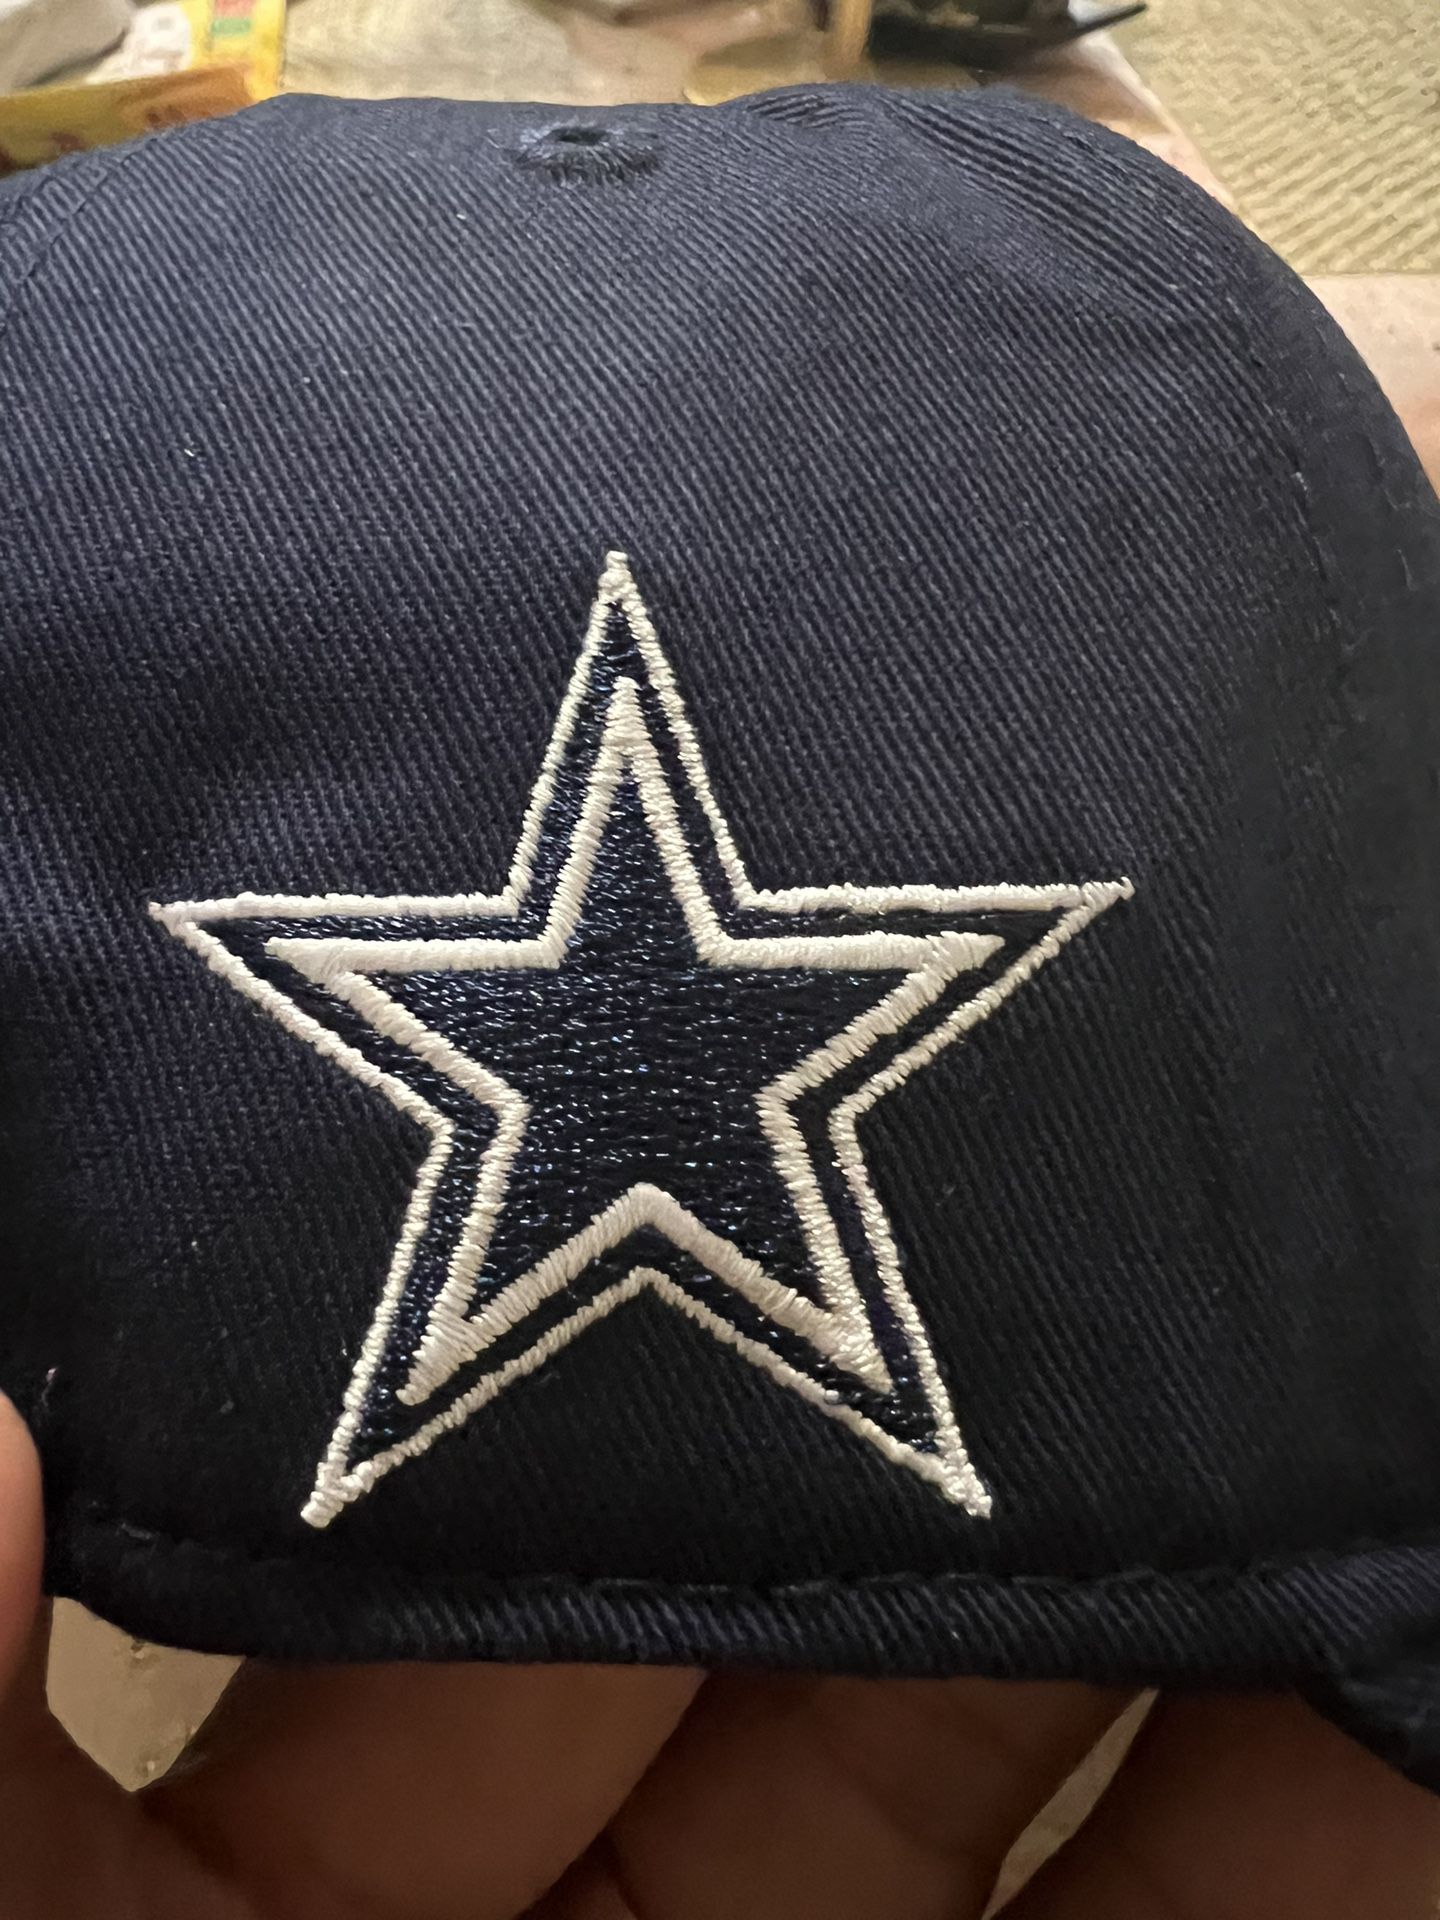 True Brvnd Brand Hat Cap Dallas Cowboys Nfl Football Mens Adjustable Navy  Upside Down Dallas Texas Gorra Cachucha for Sale in Grand Prairie, TX 